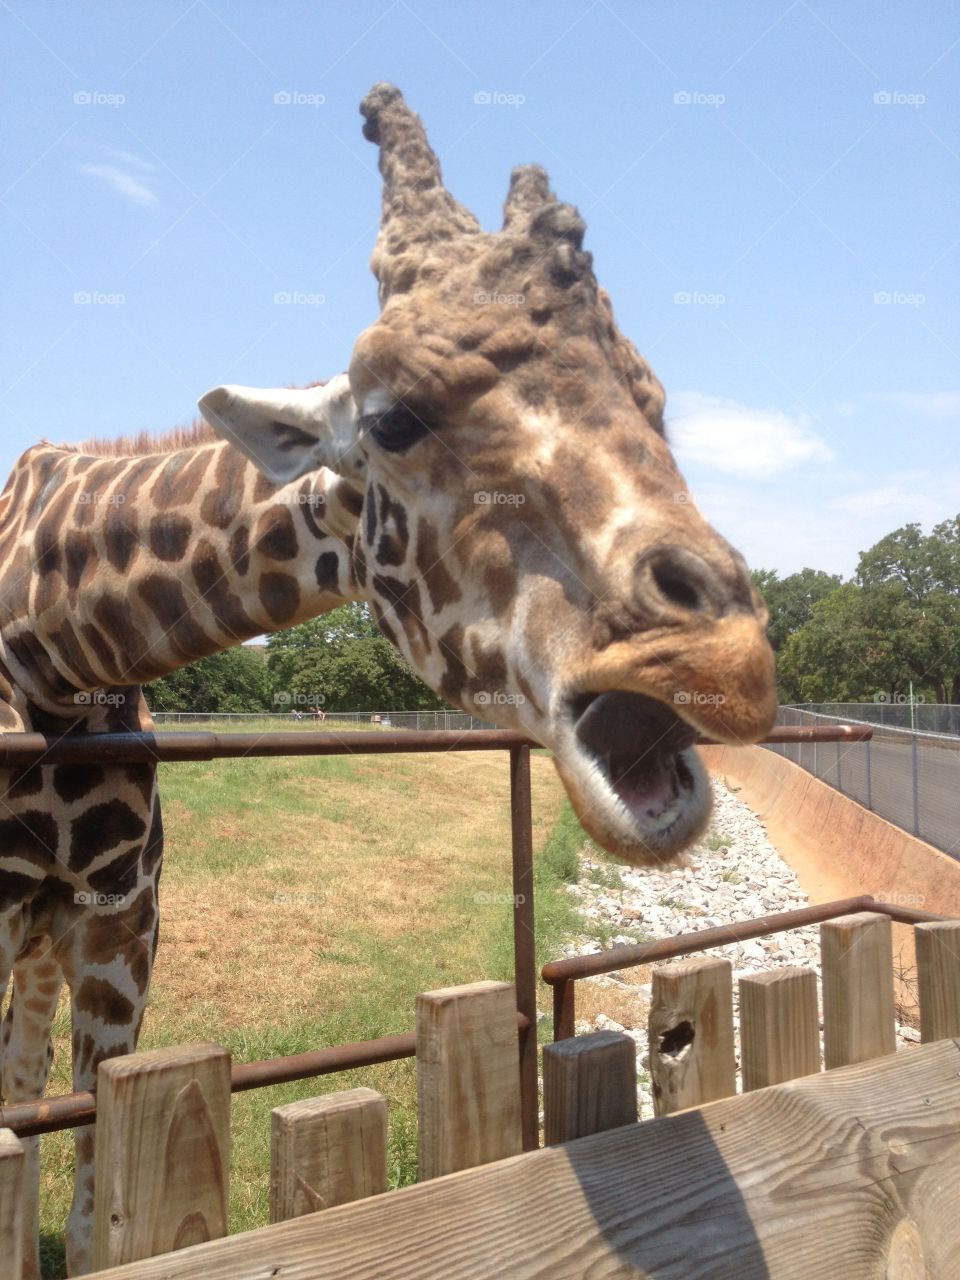 Giraffes mouth is open